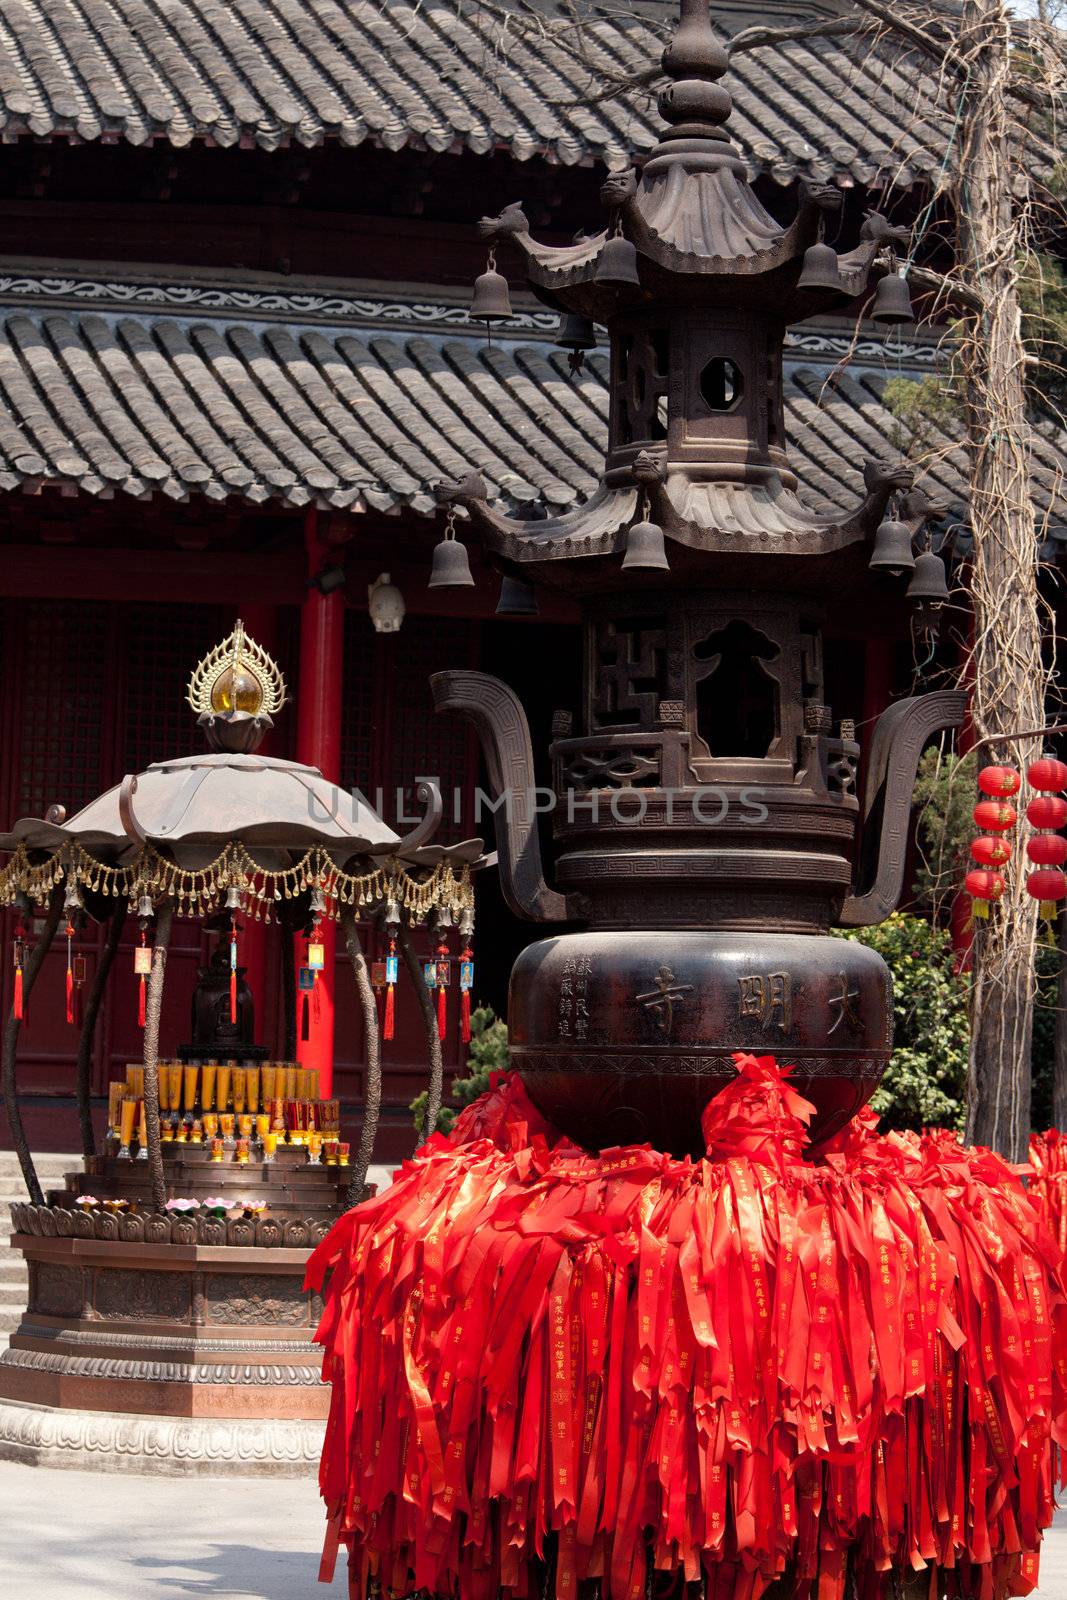 Gaomin tempel by aidasonne